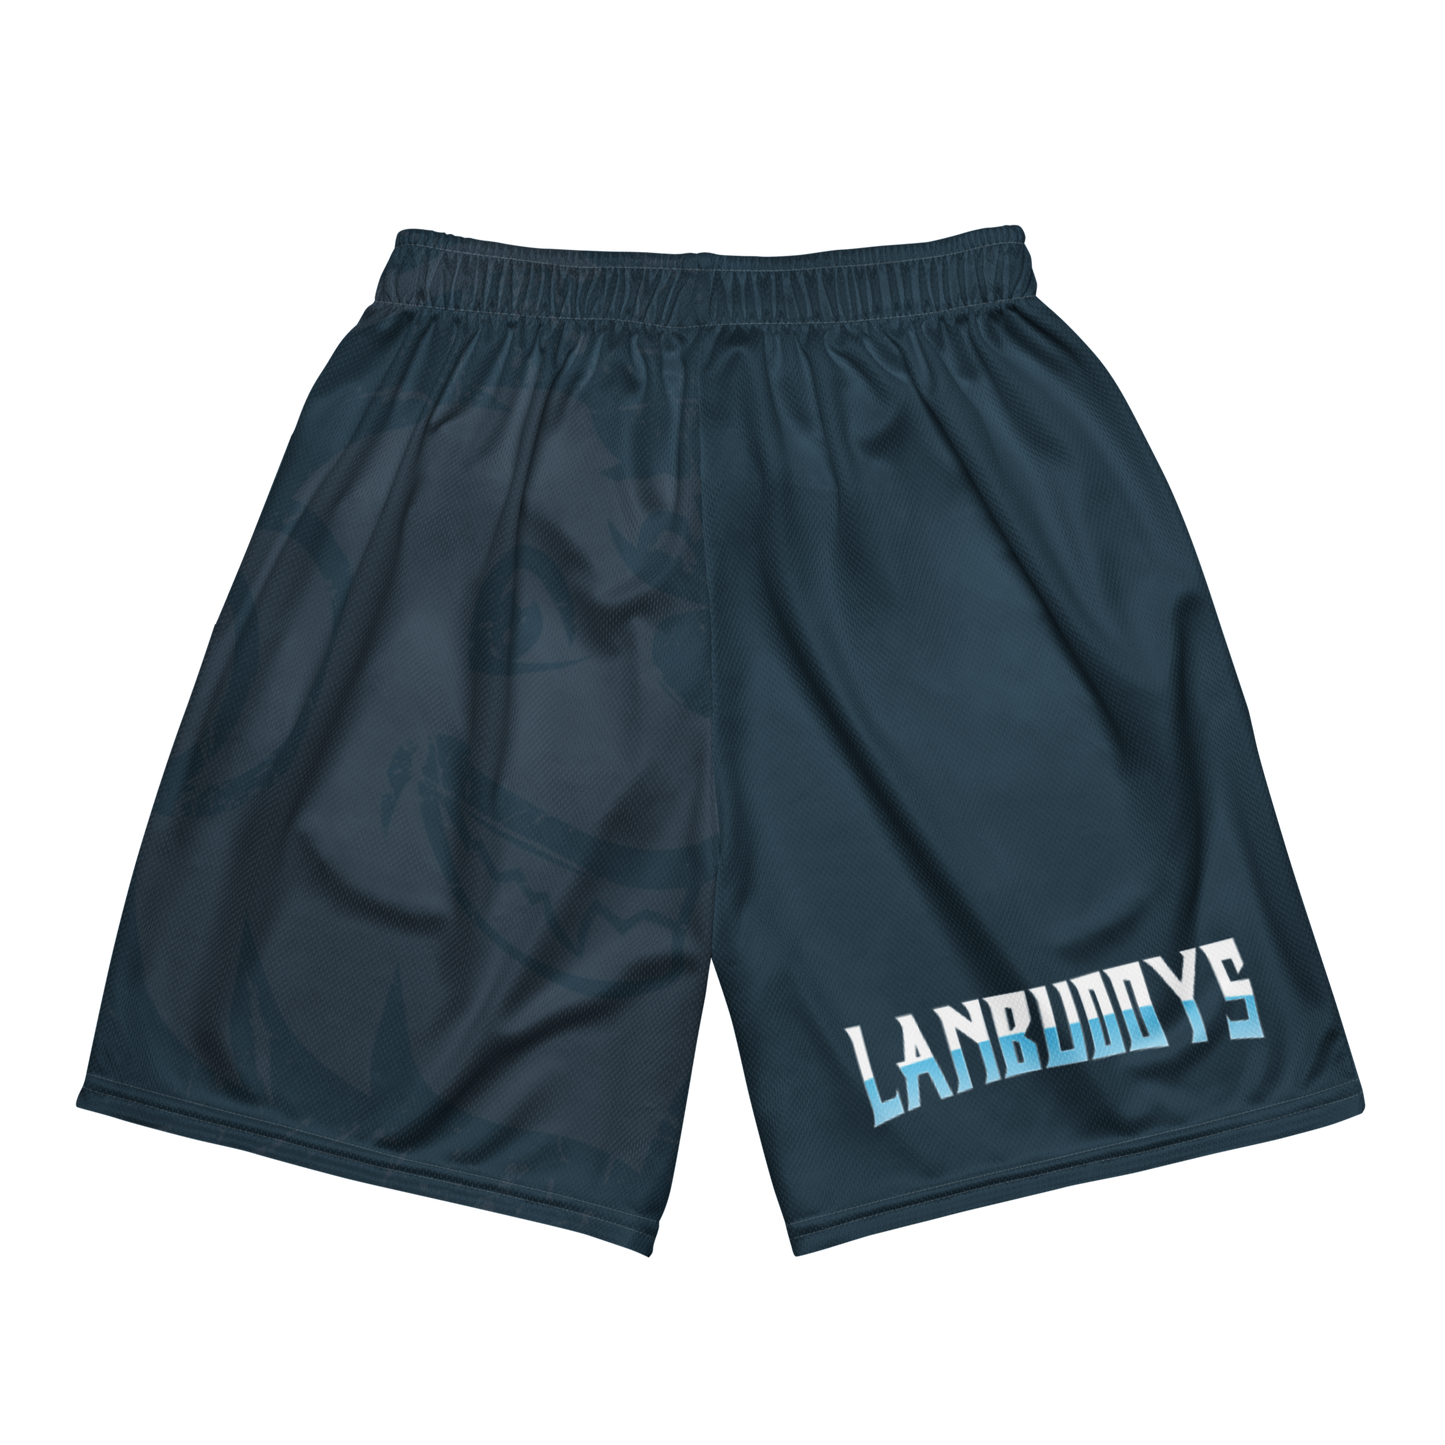 LANBUDDYS - Crew Shorts 2023